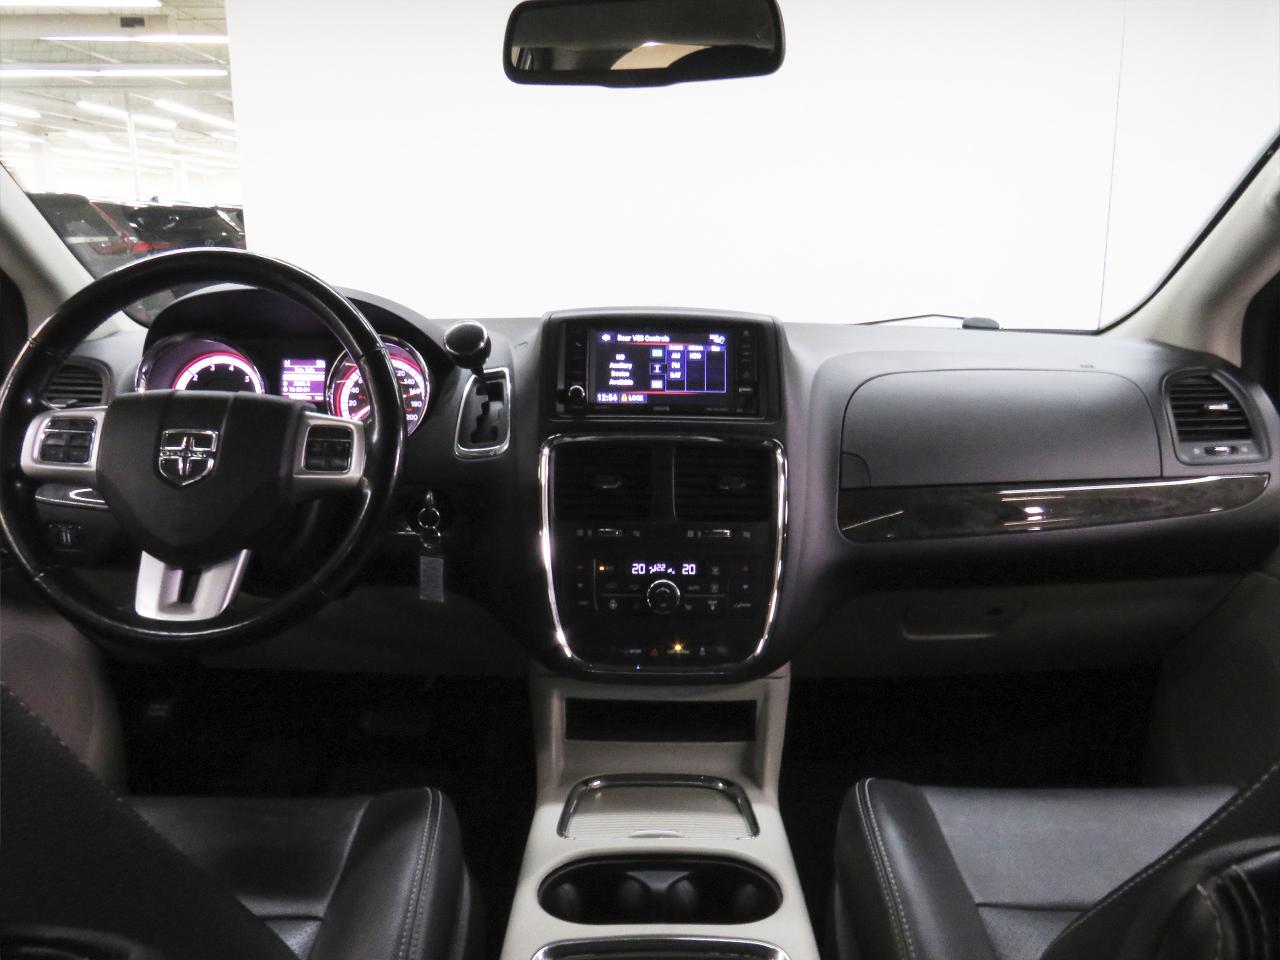 2020 Dodge Grand Caravan CREW PLUS | Nav | DVD | Leather | Heated Seats